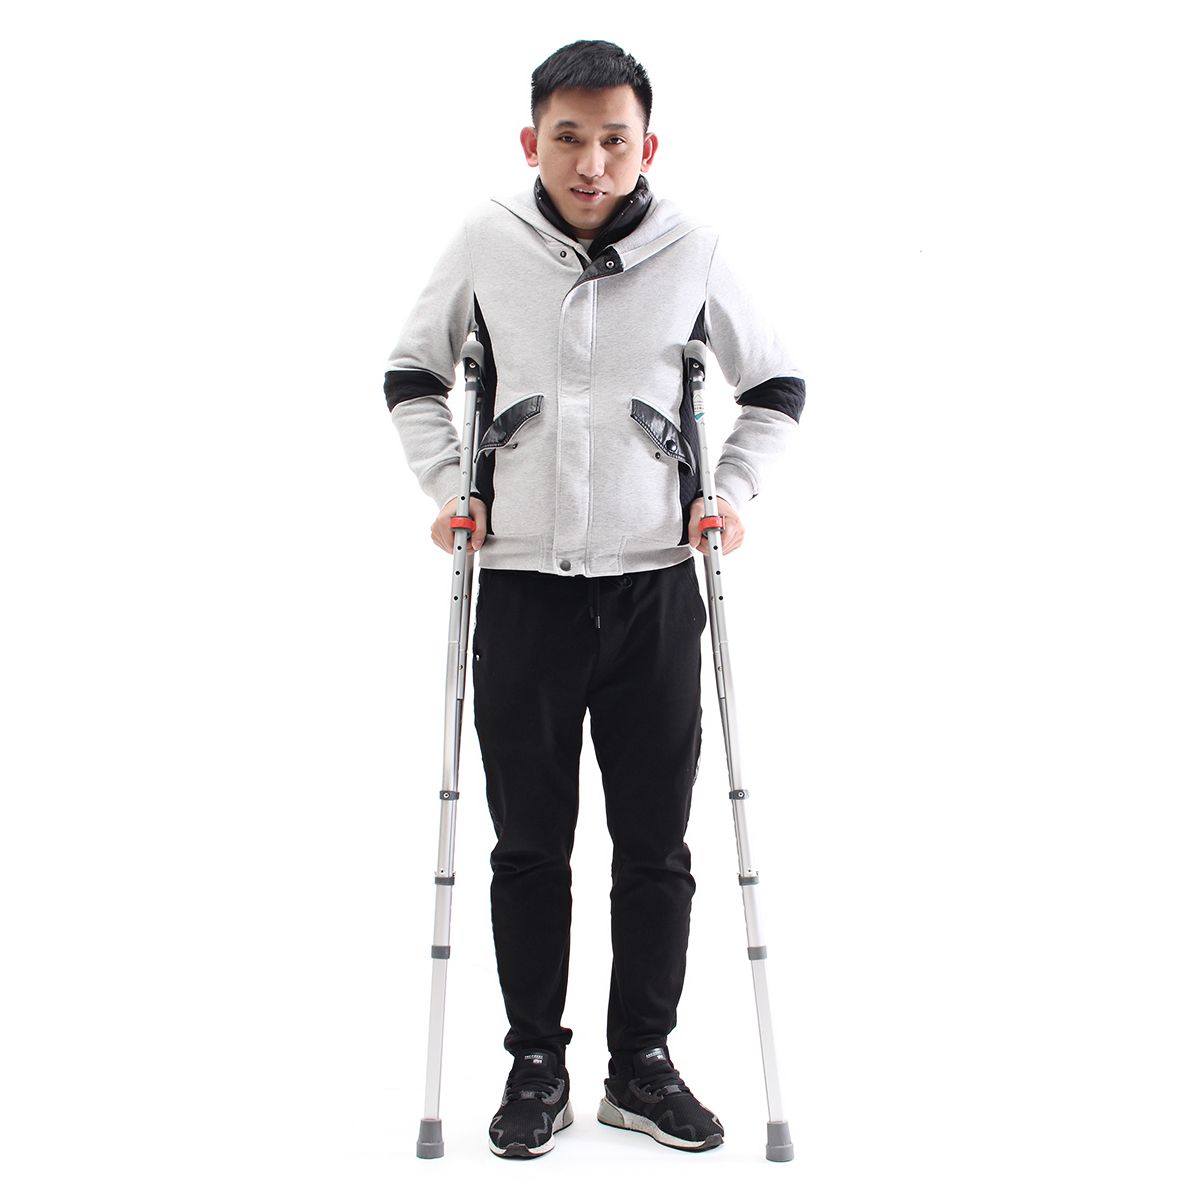 2Pcs-Adjustable-Height-Underarm-Crutched-Aluminium-Alloy-Material-Walking-Stick-Tools-Kit-1395967